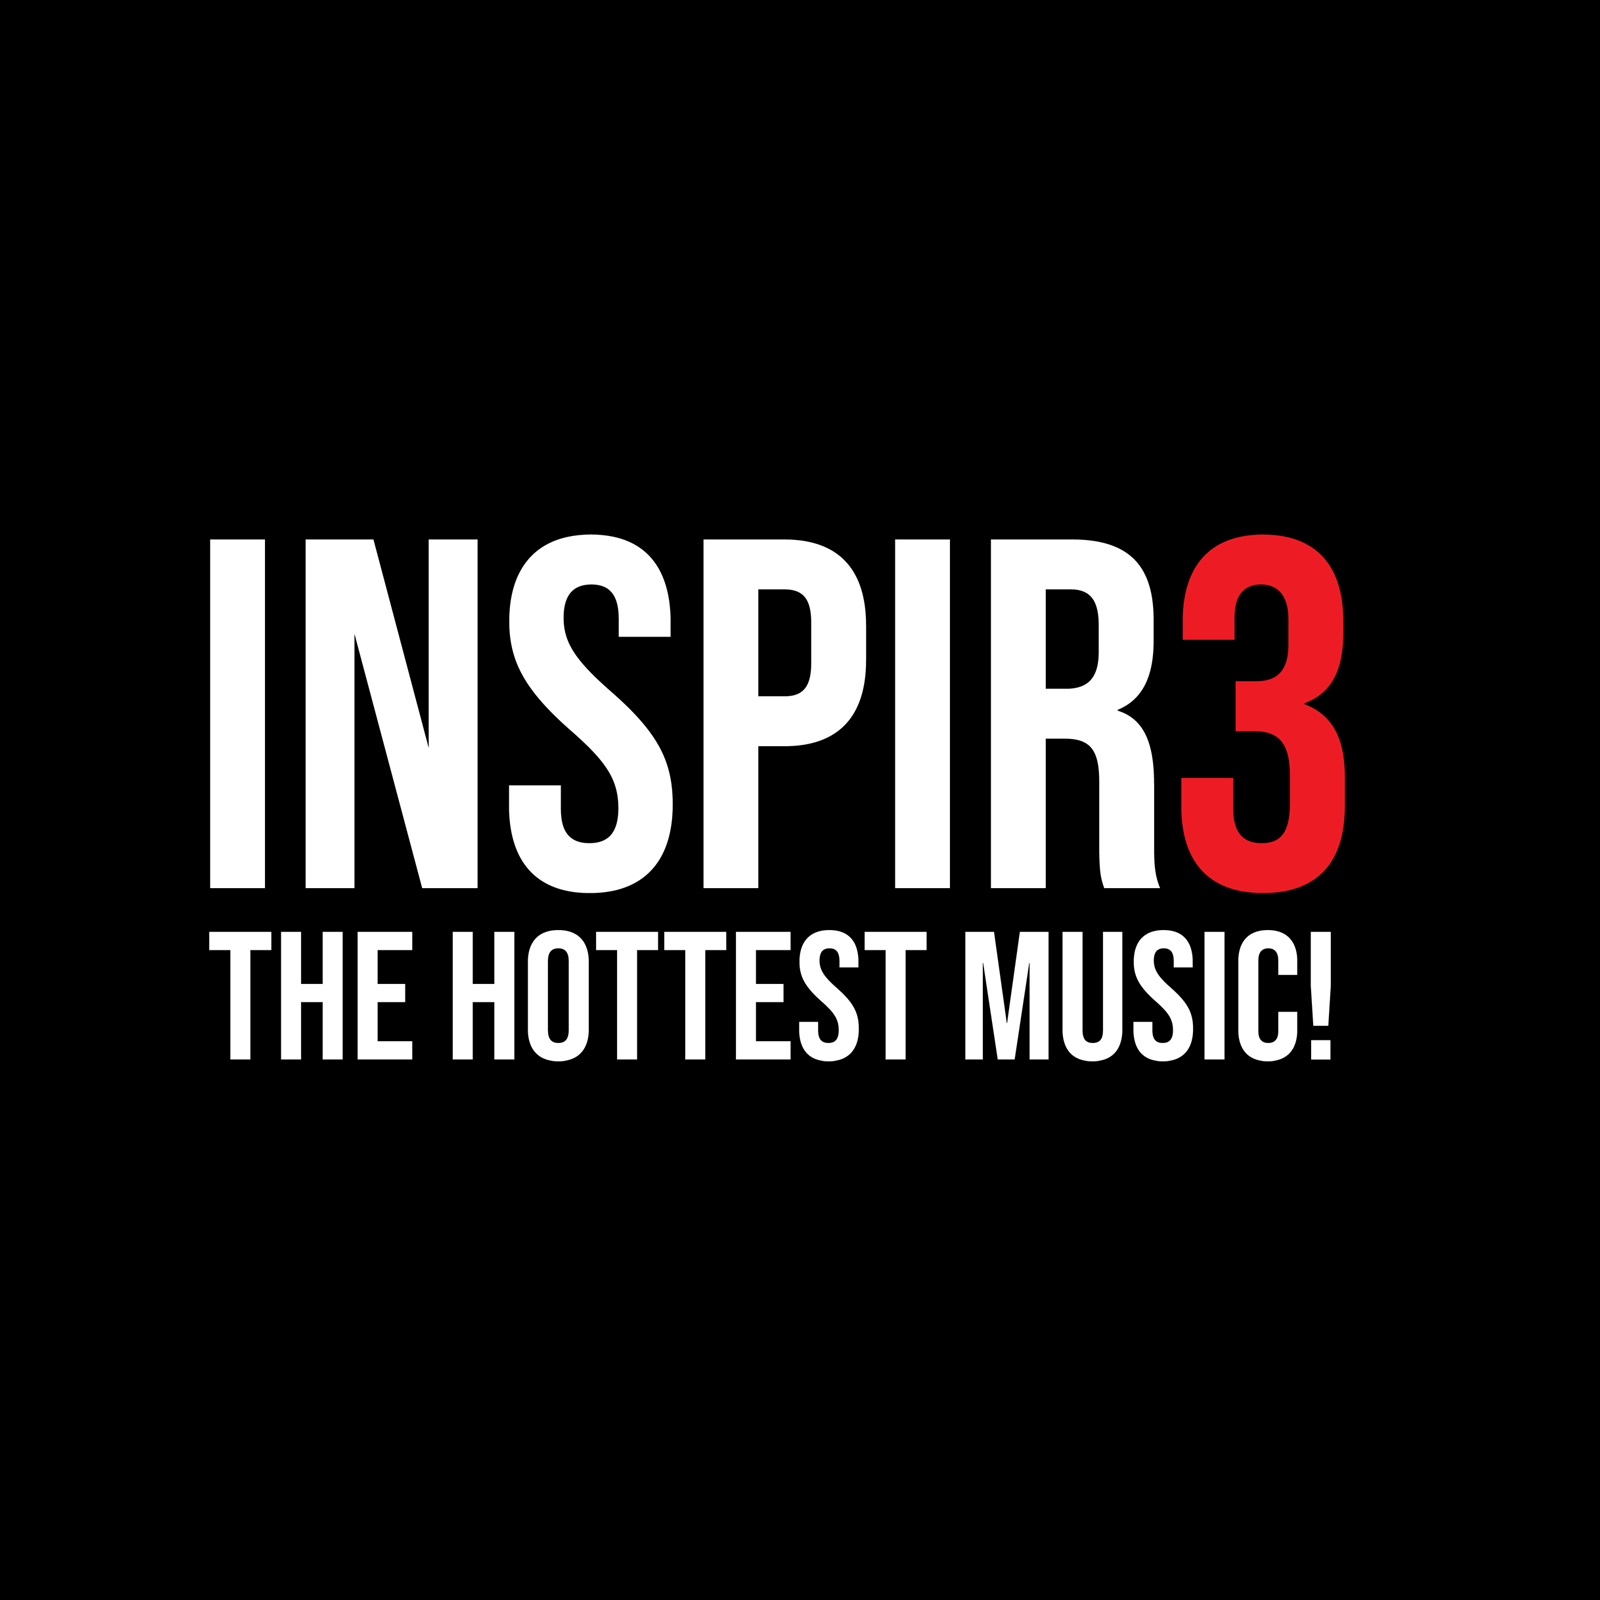 Art for Inspir3 Radio Jingle by Inspir3